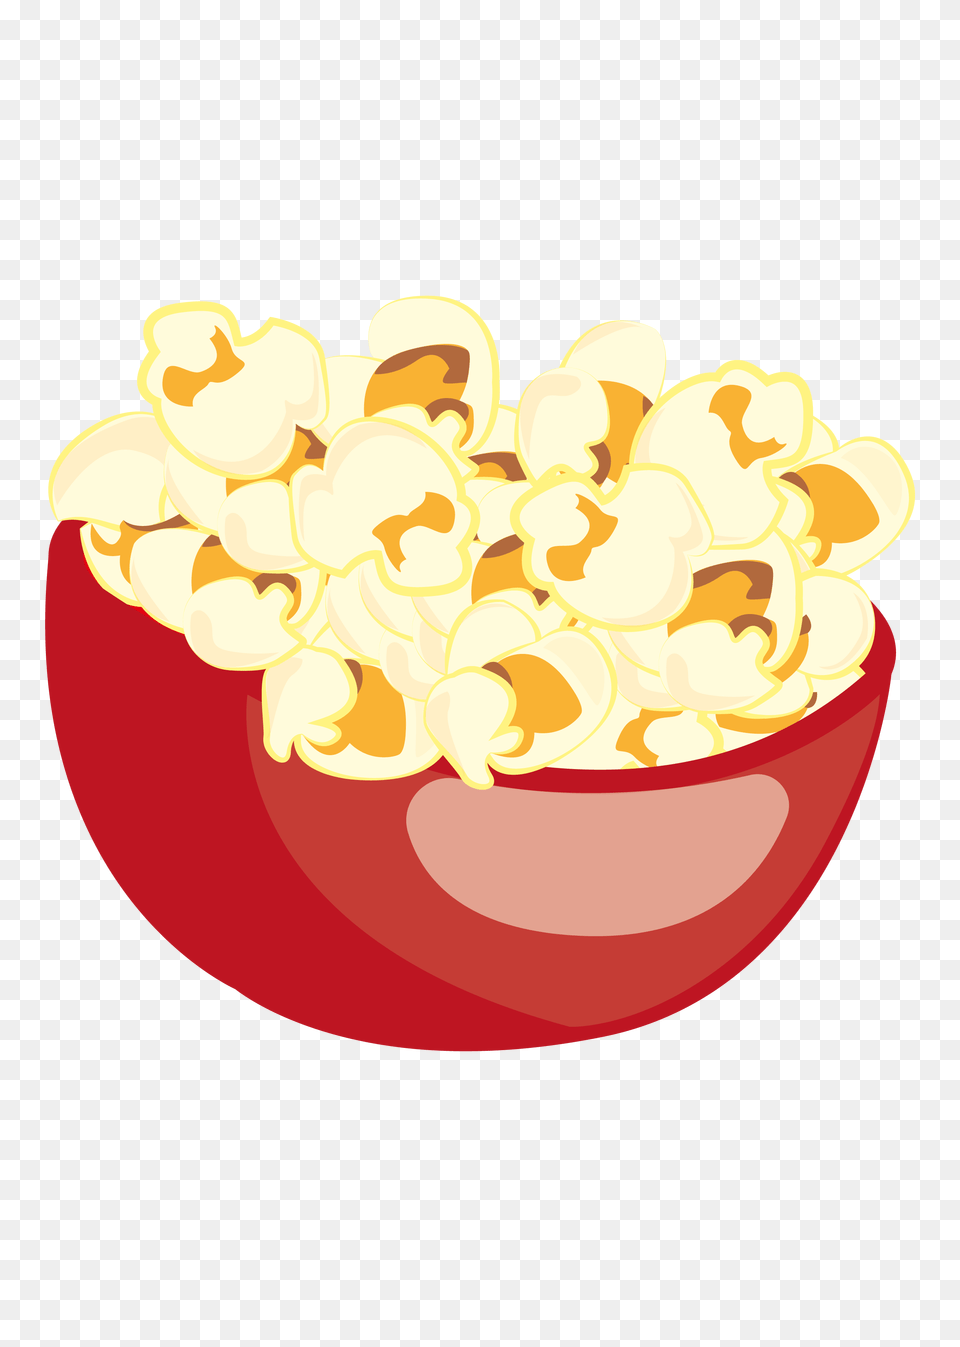 Popcorn, Food, Snack Png